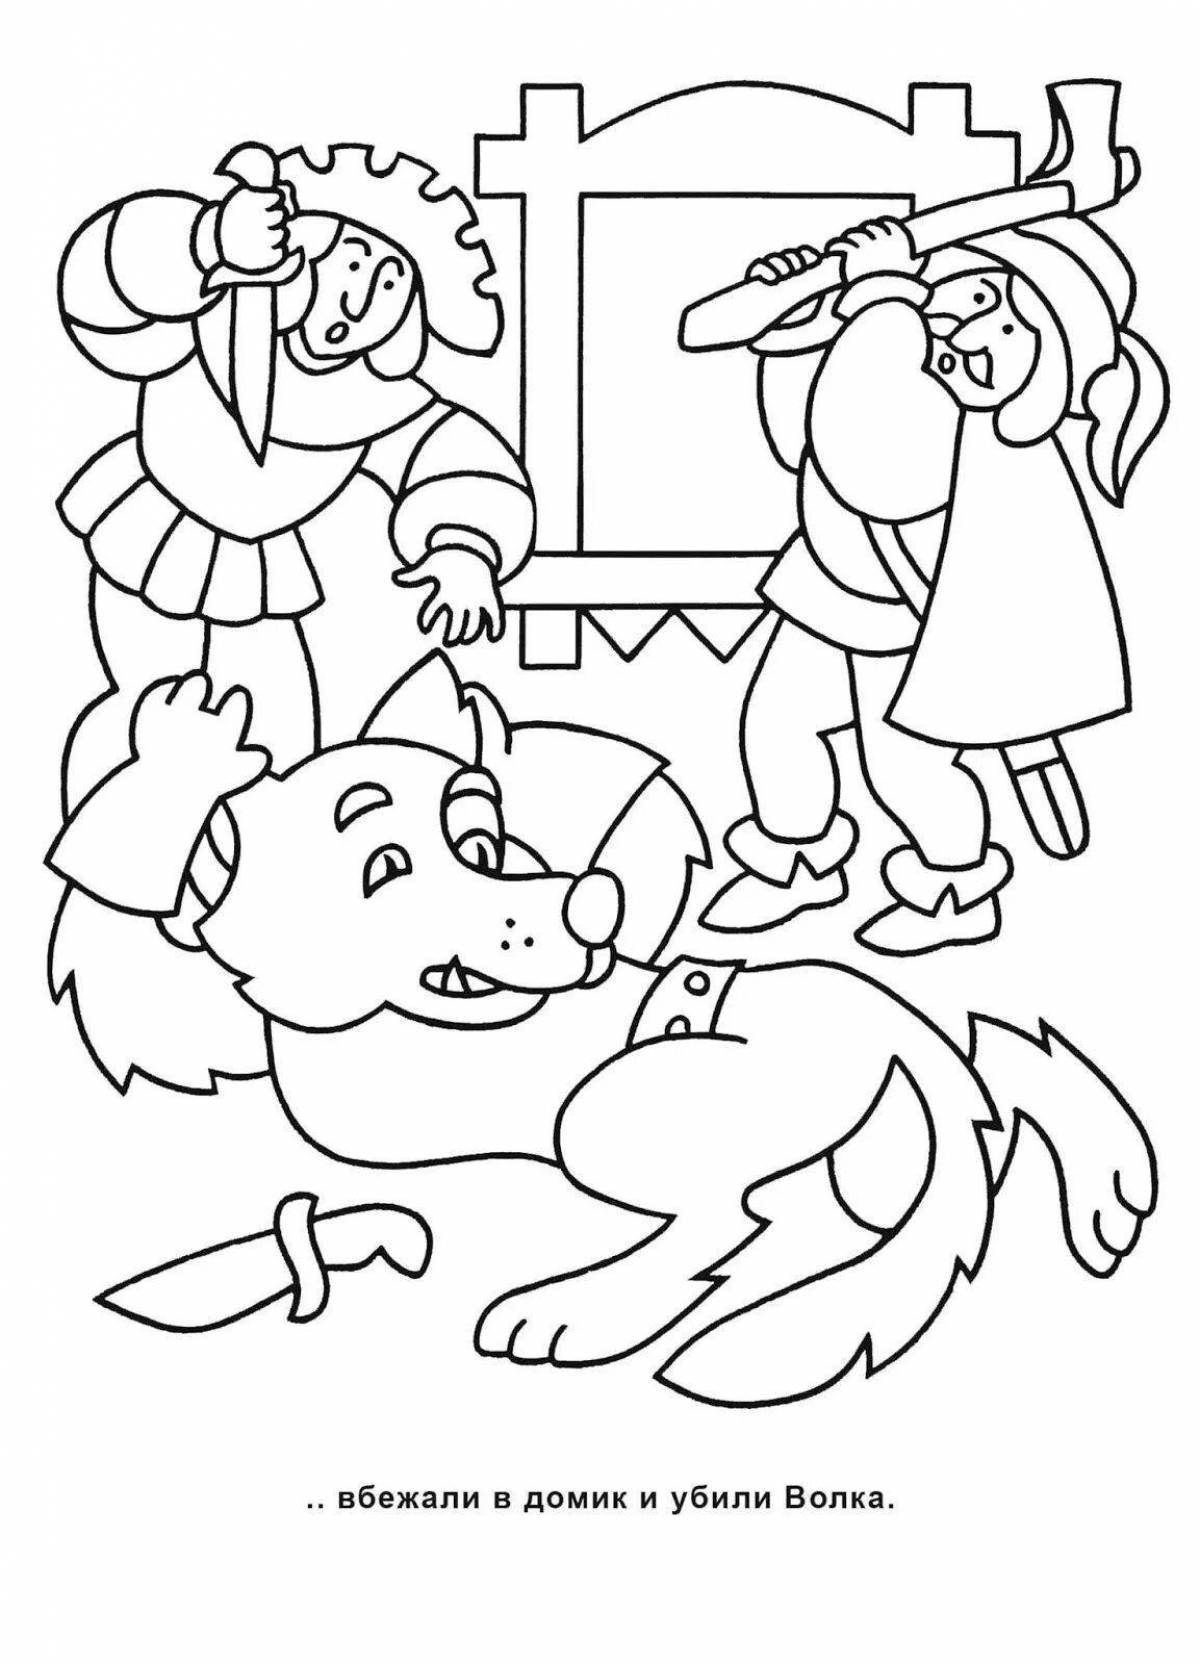 Perro's fairy tale coloring book for preschoolers